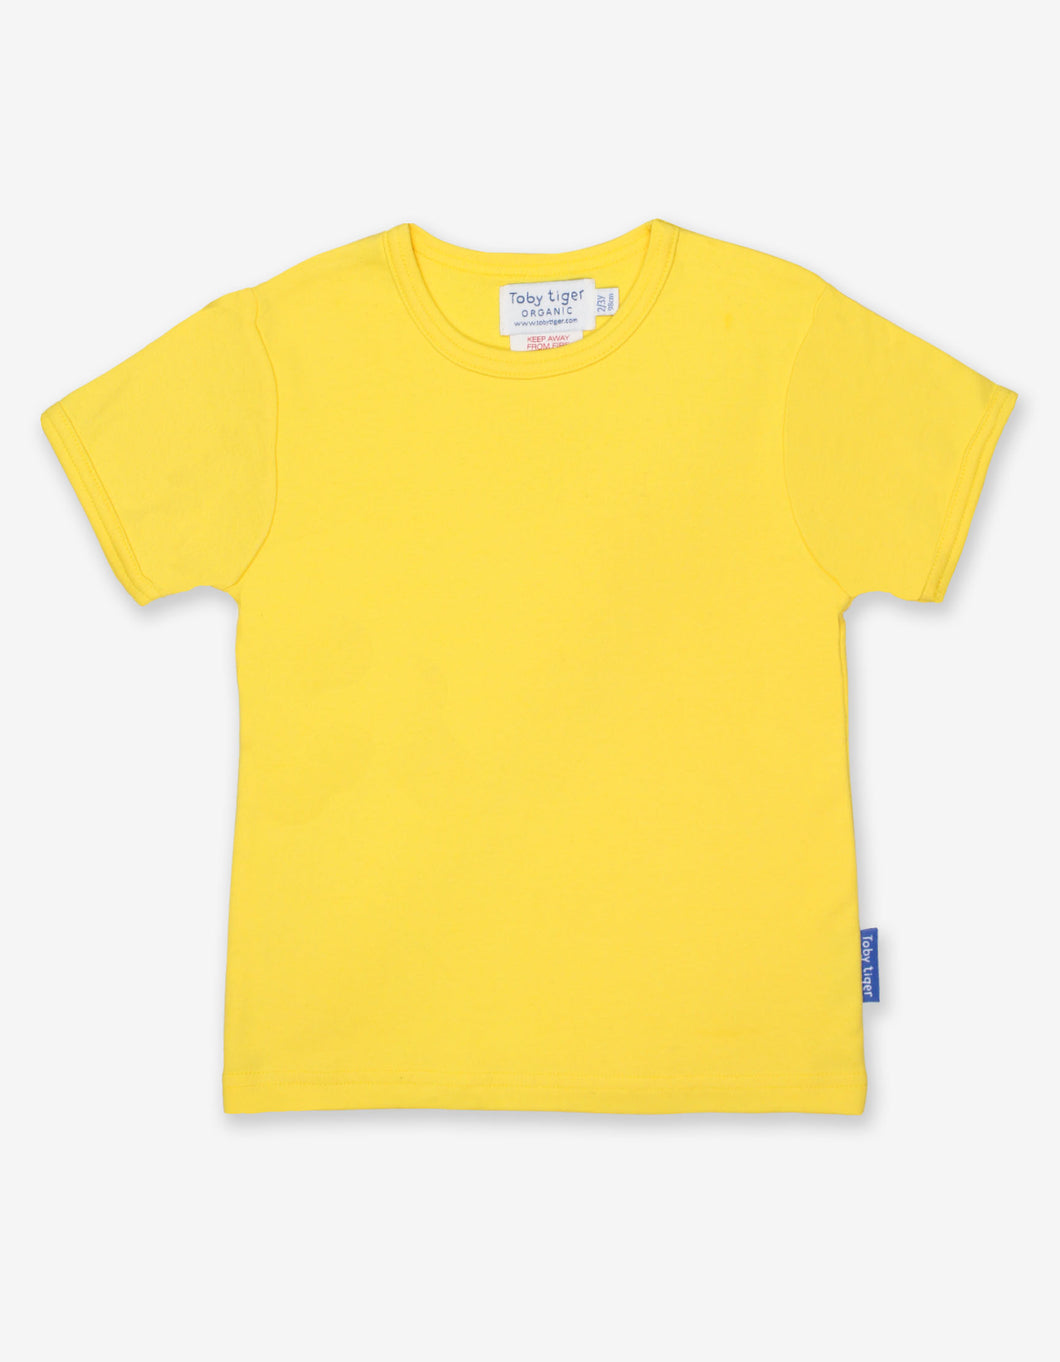 Organic Yellow Basic T-Shirt